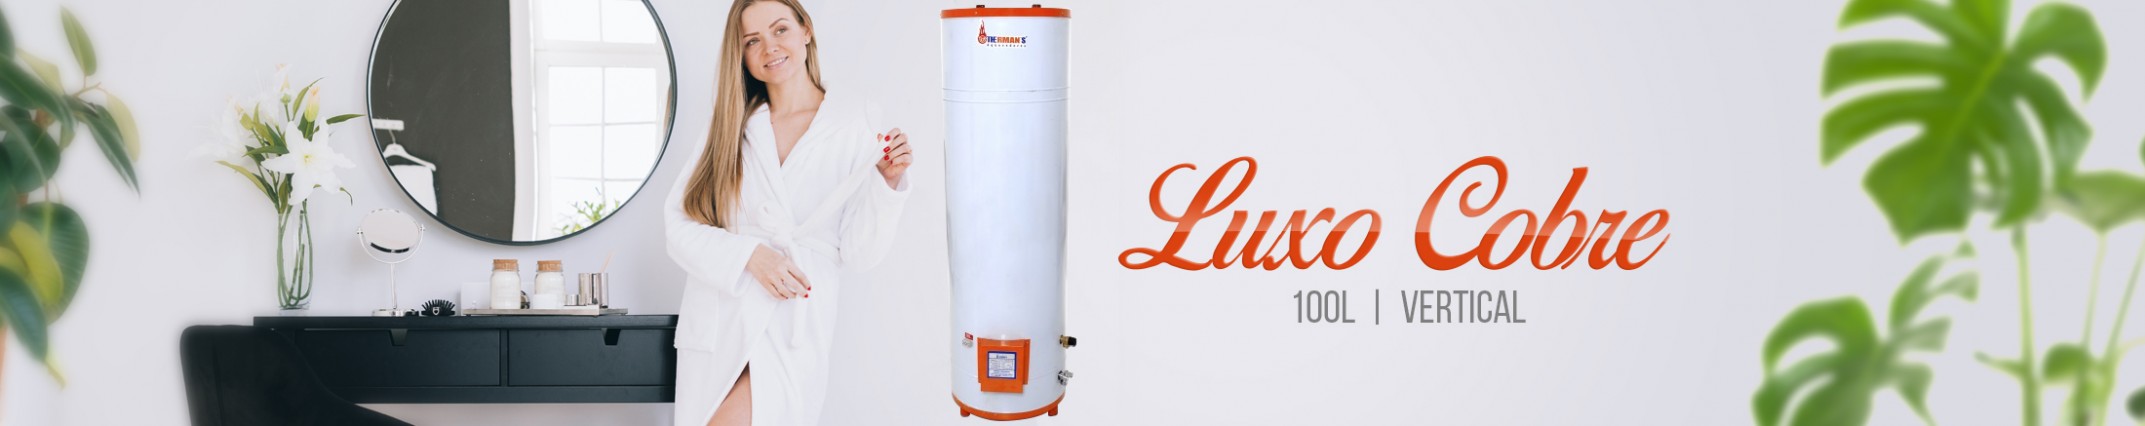 Luxo Cobre 100L Vertical